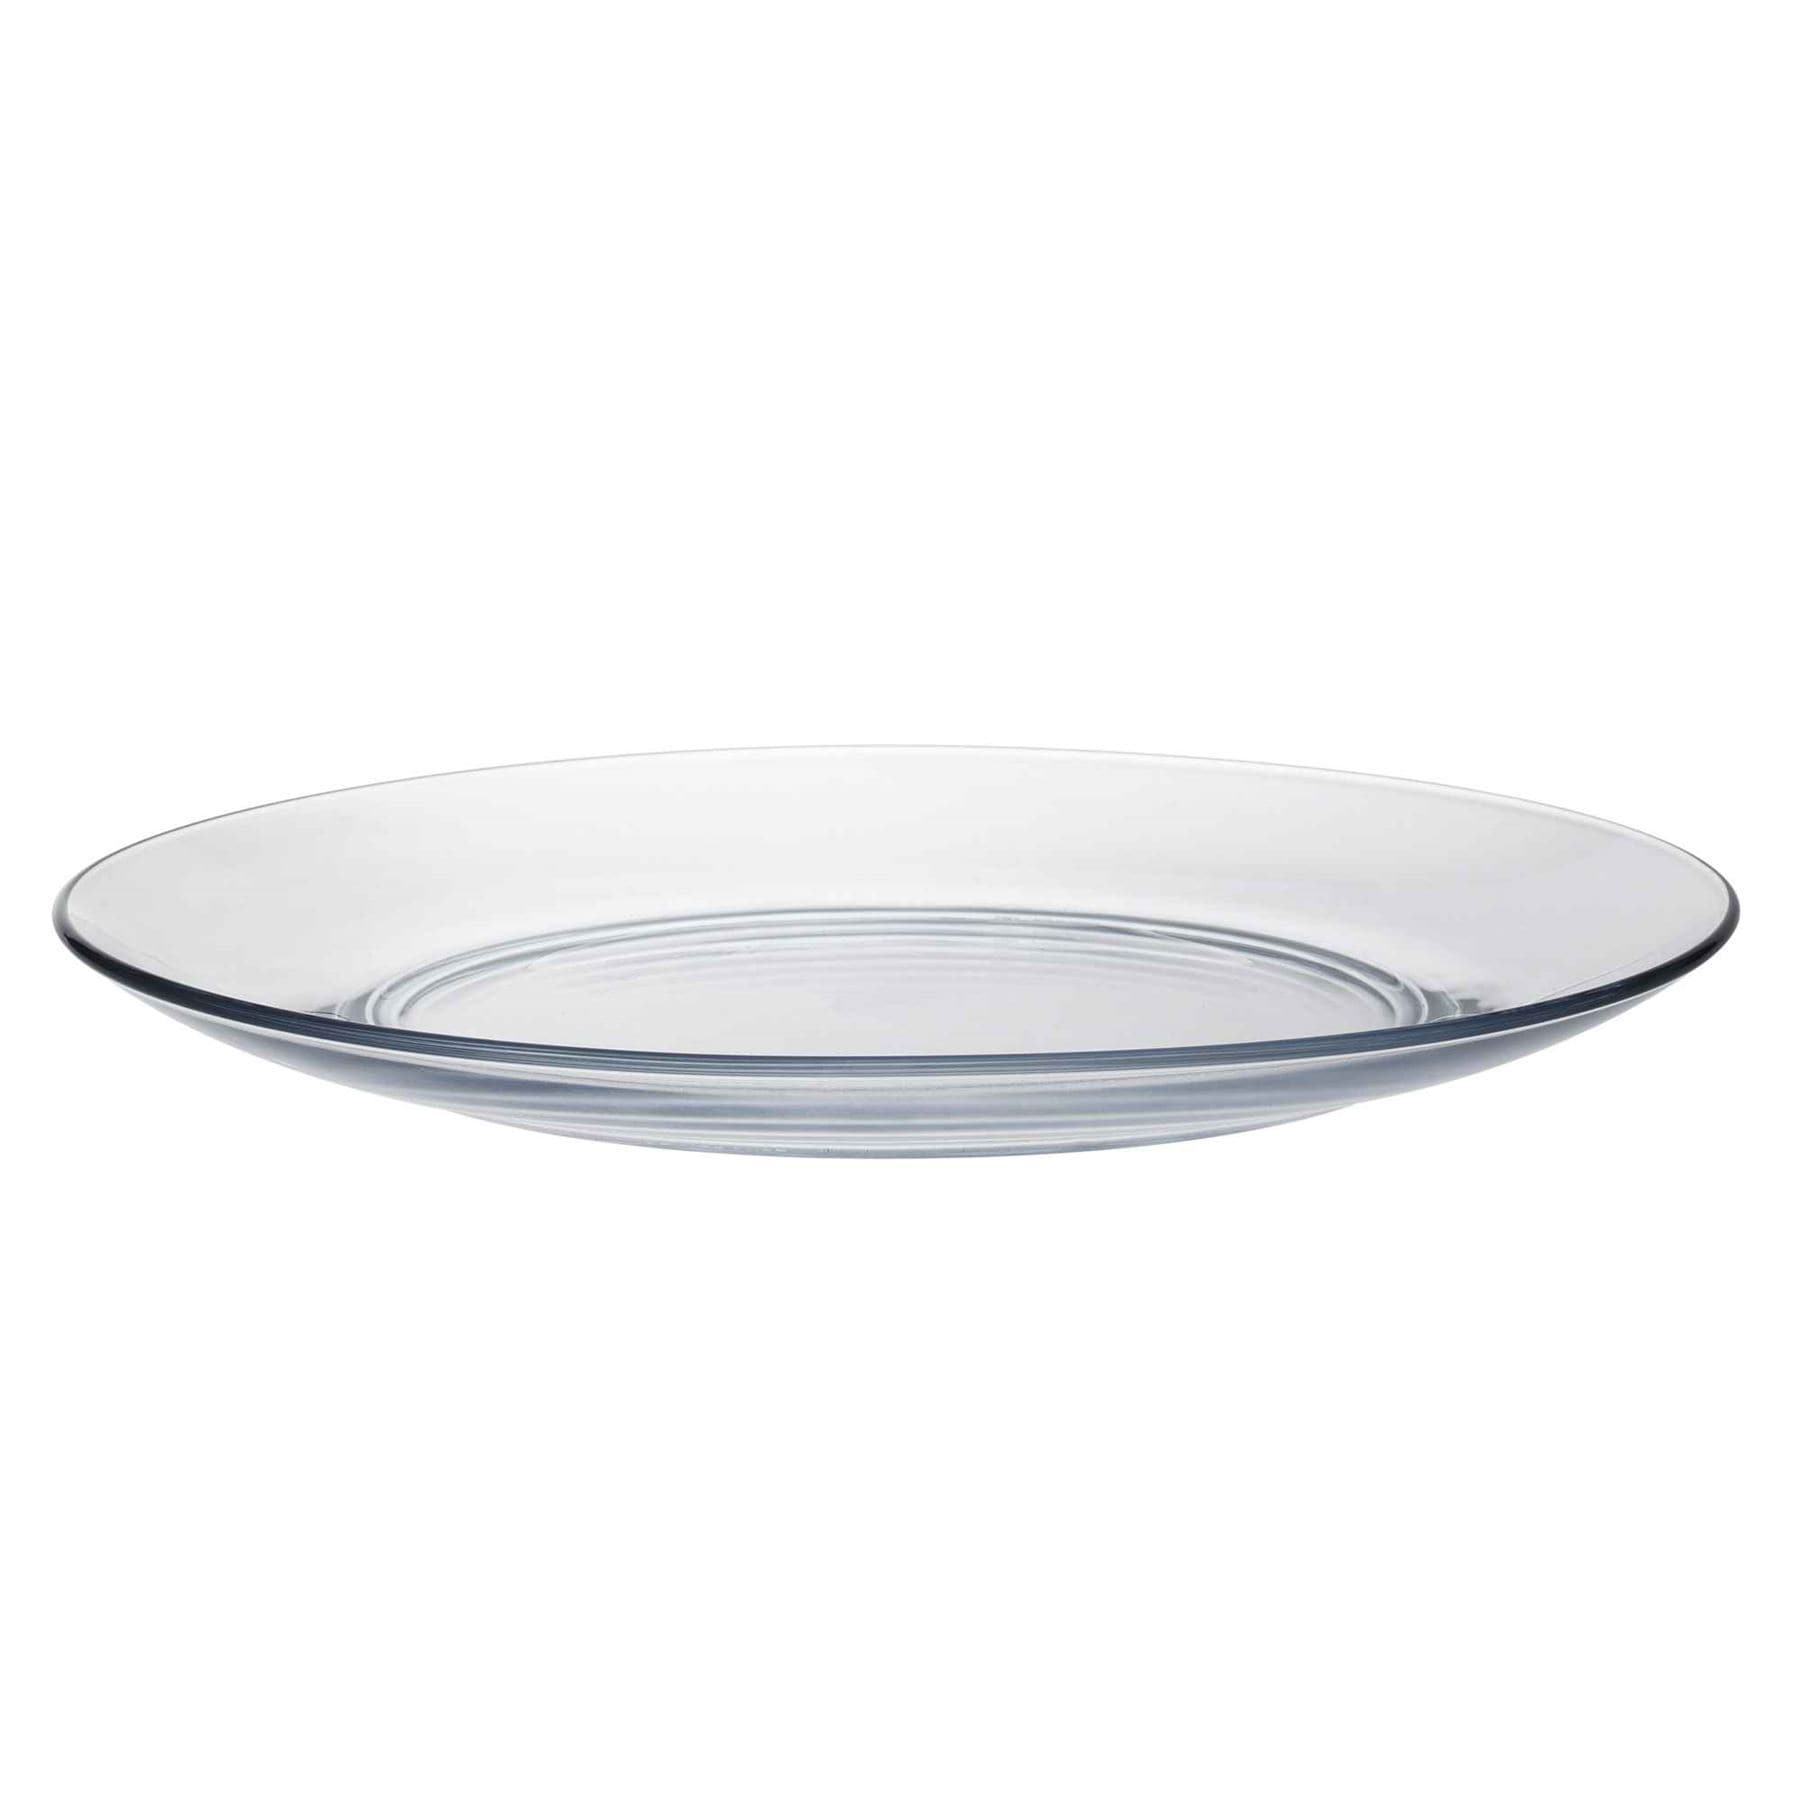 Glass Dinner Plates||طبق